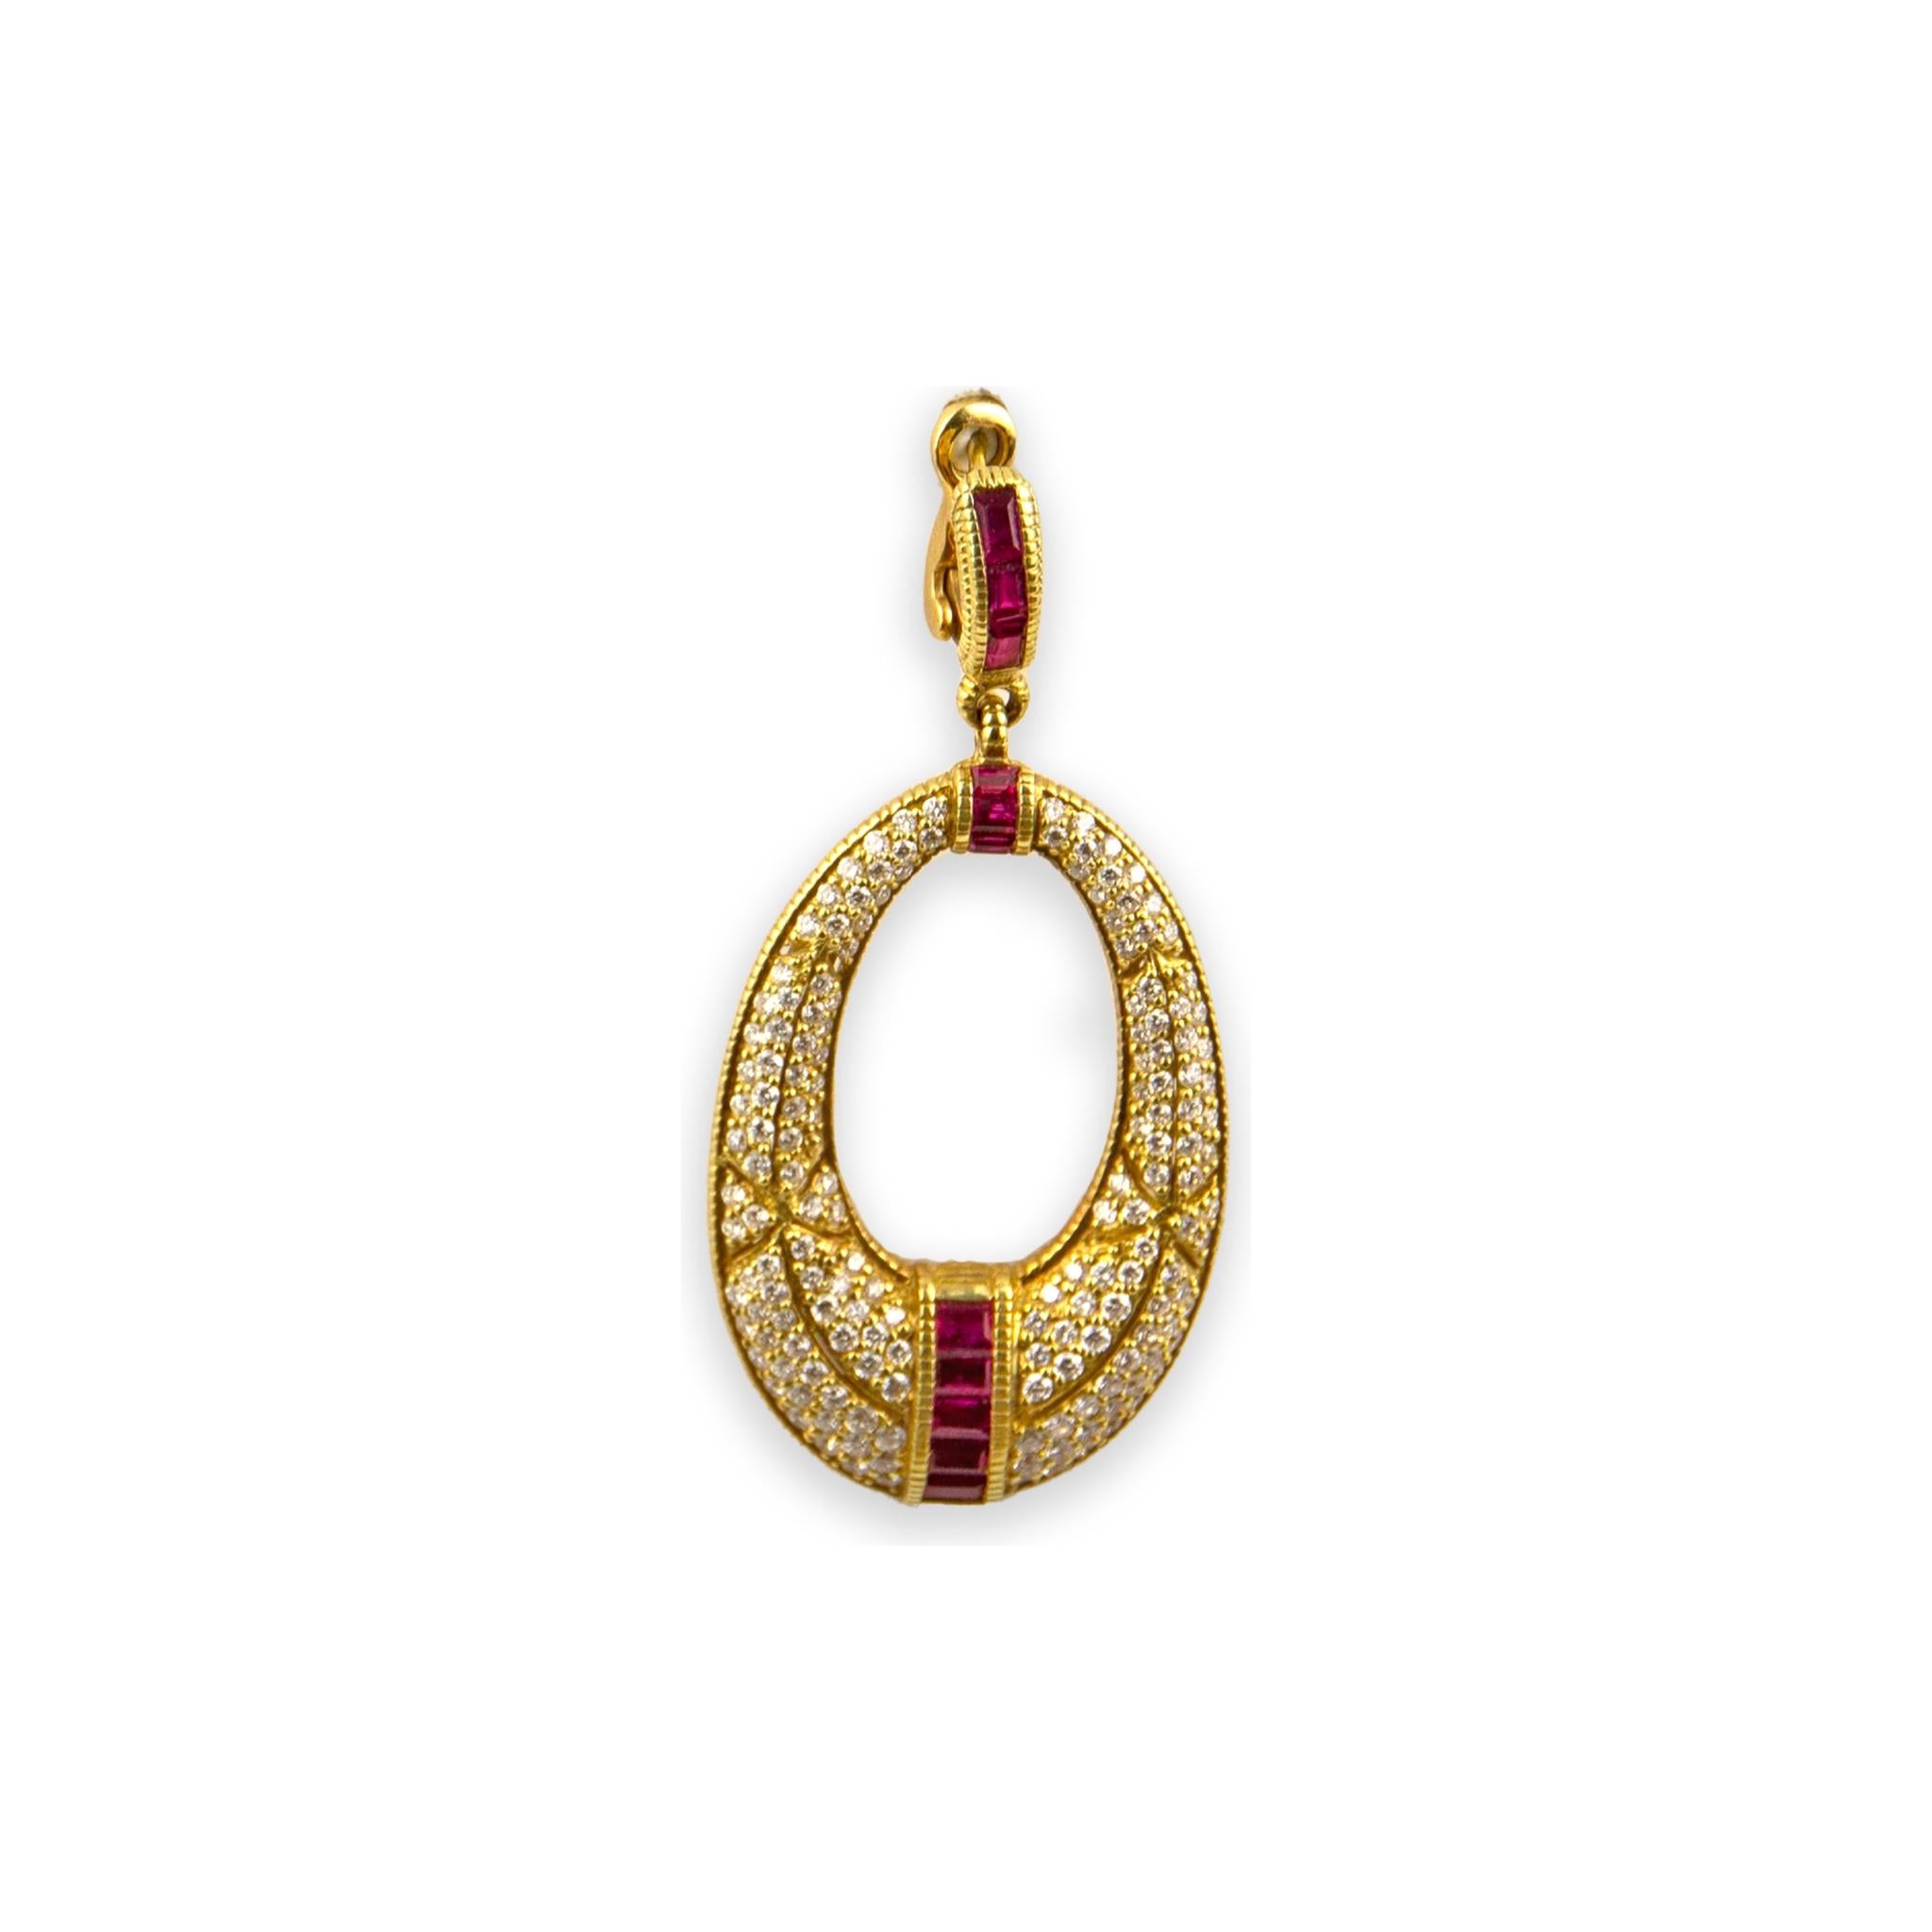 Judith Ripka 18K Yellow Gold Earrings
Ruby and Diamond
Diamonds: 2.74ctw
SKU: JR01037
Retail price: $21,000.00